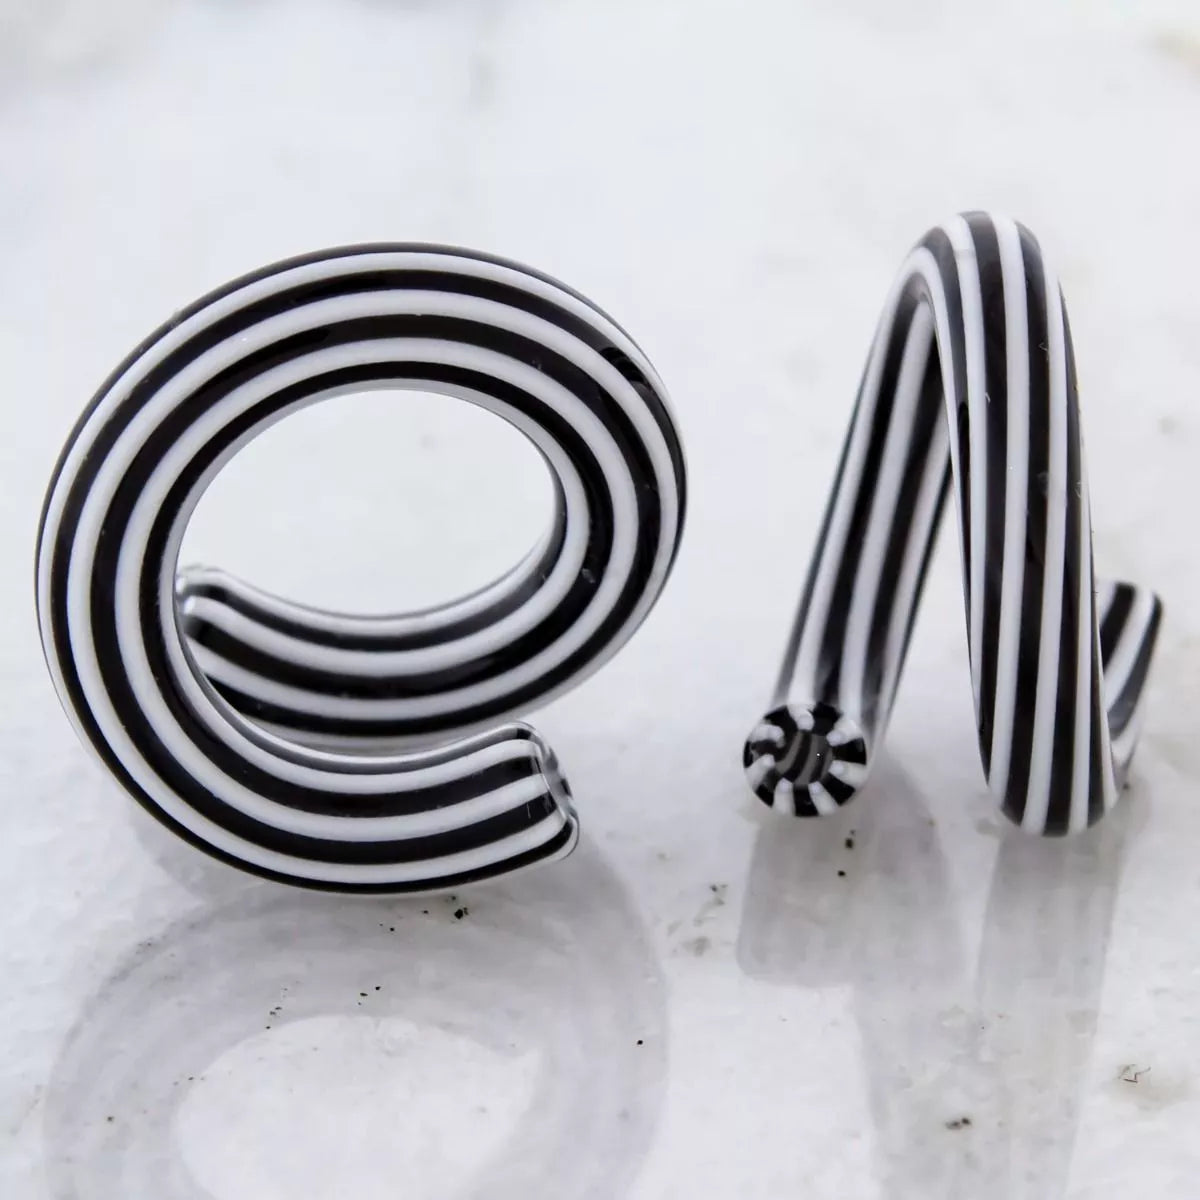 Tapers - Spirals Borosilicate Glass Black And White Striped Ring - 1 Piece #SPLT#2 -Rebel Bod-RebelBod